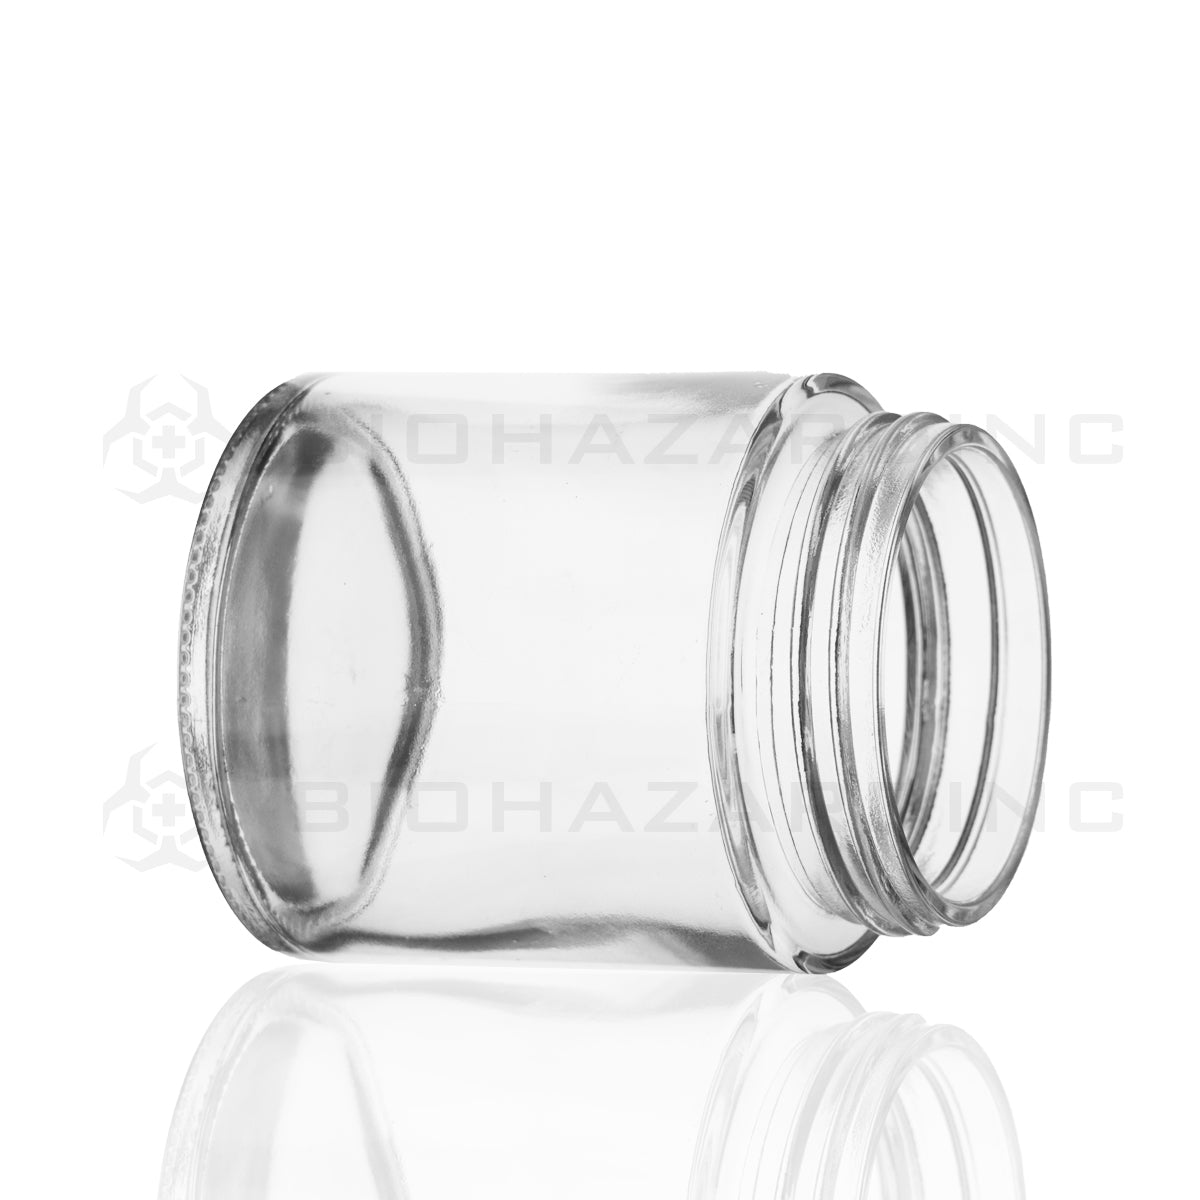 Glass Jar | Straight Sided Flush Glass Jars - Clear | 53mm - 4oz - 100 Count Glass Jar Biohazard Inc   